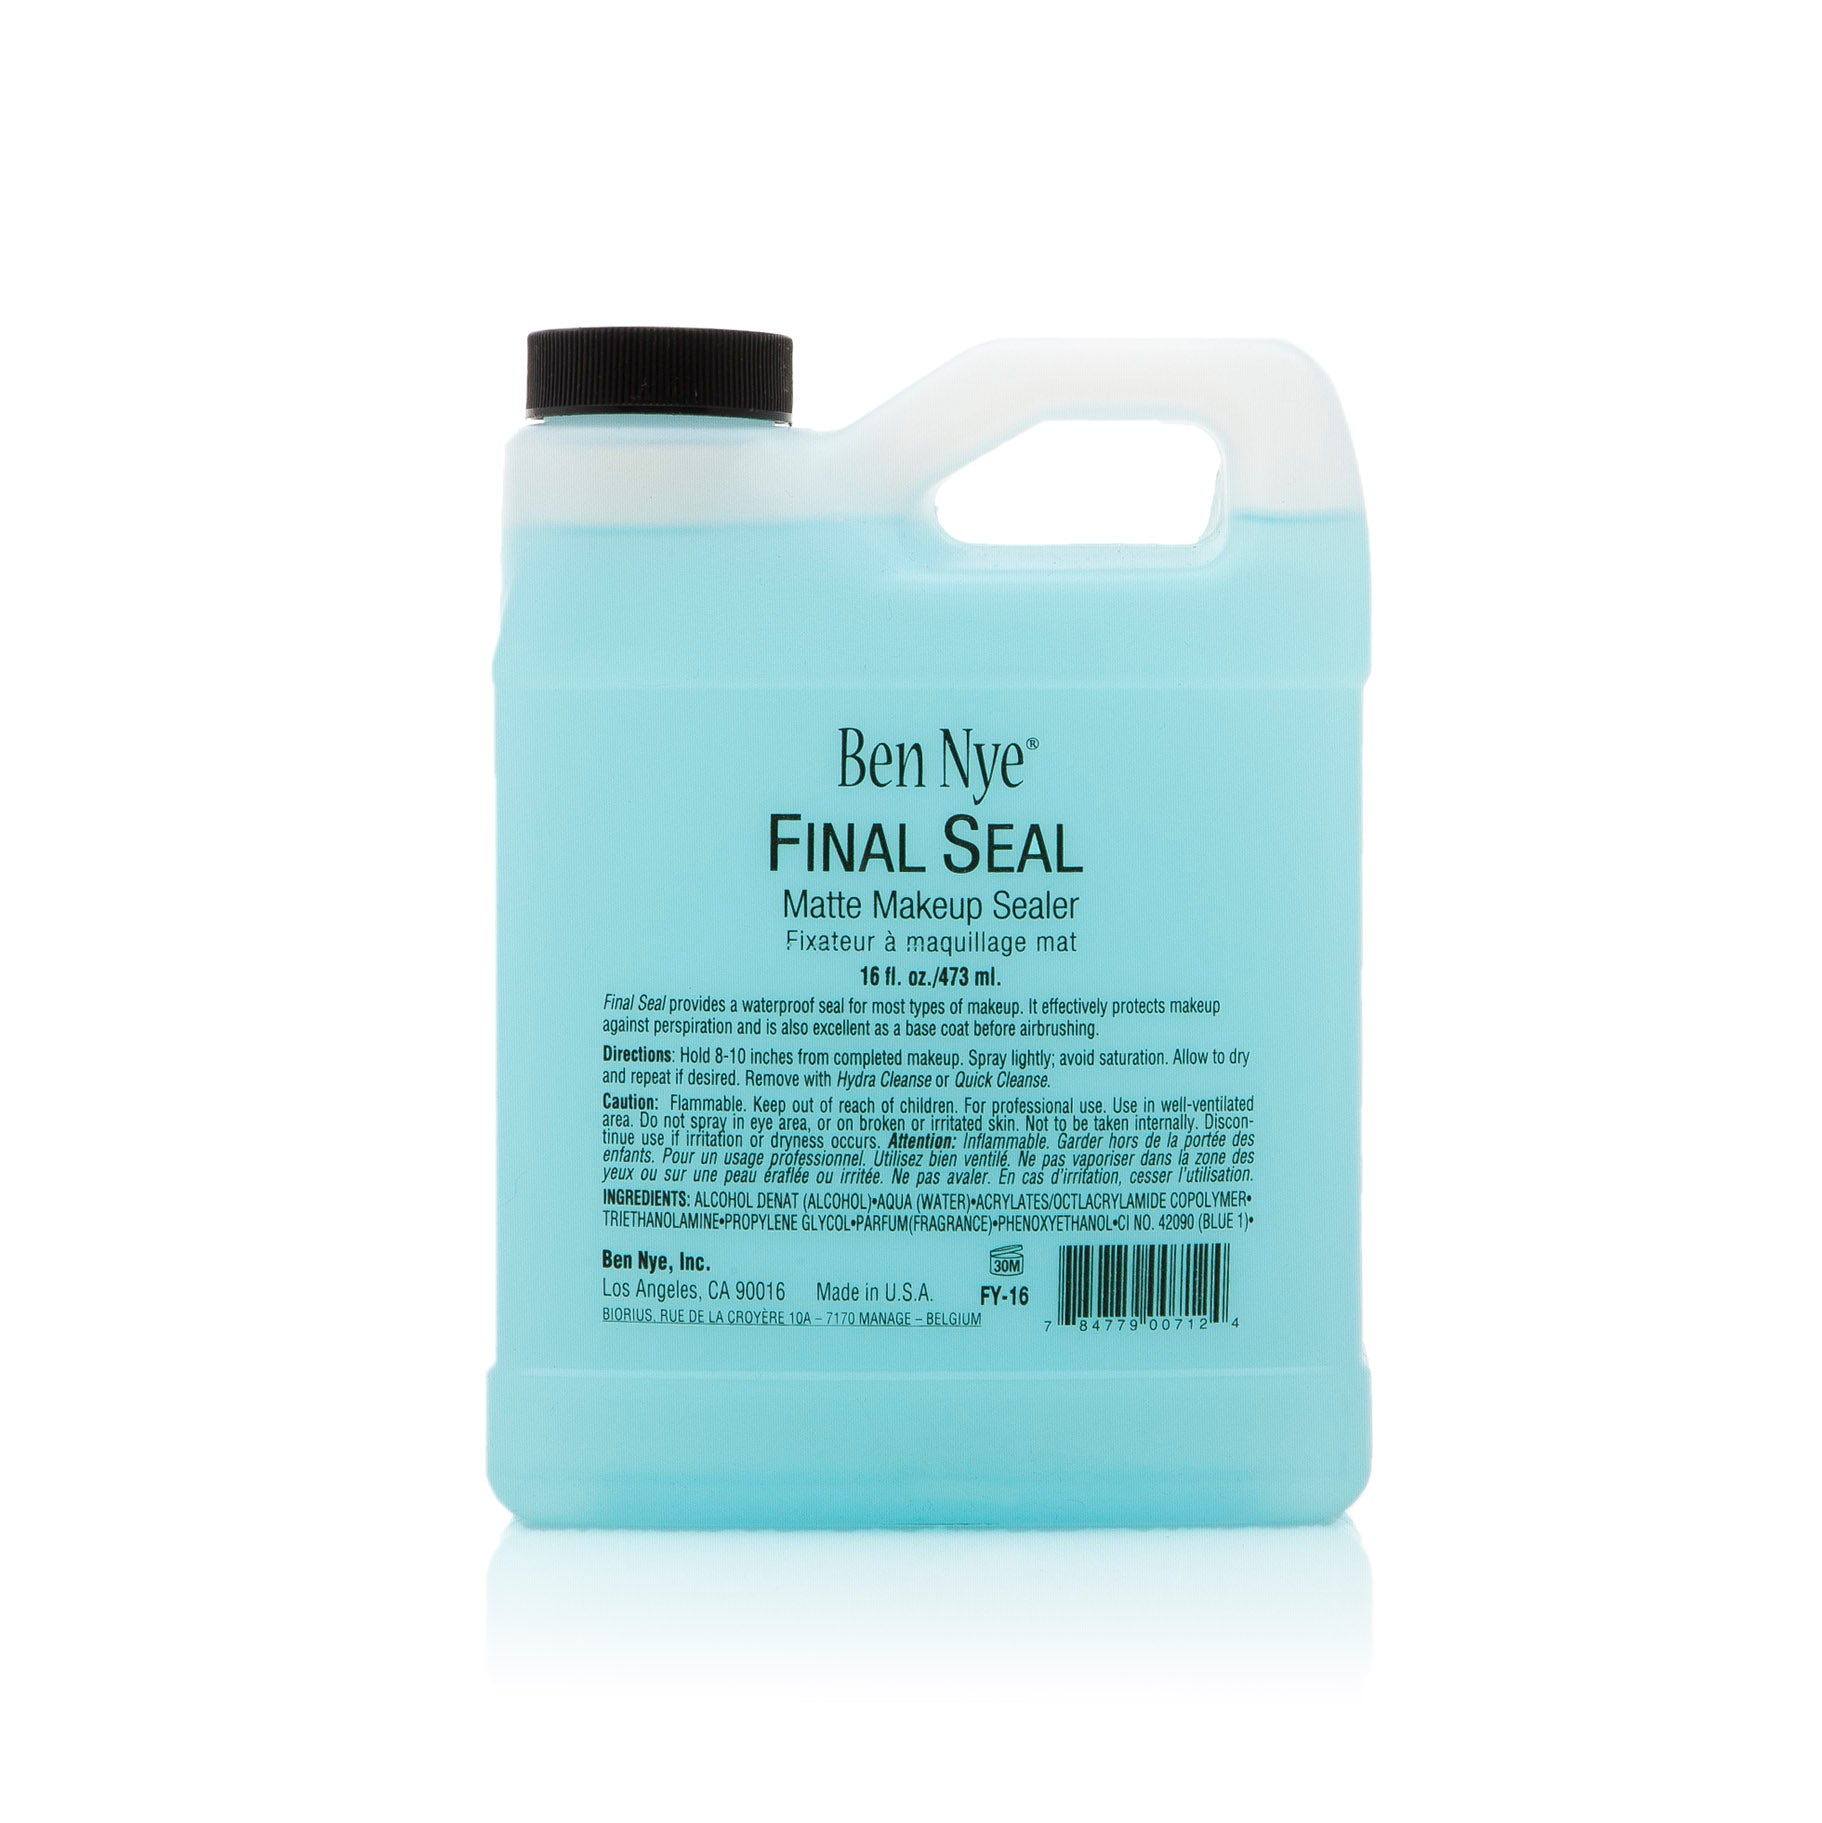 Does It Work: Ben Nye Final Seal Matte Setting Spray Review 